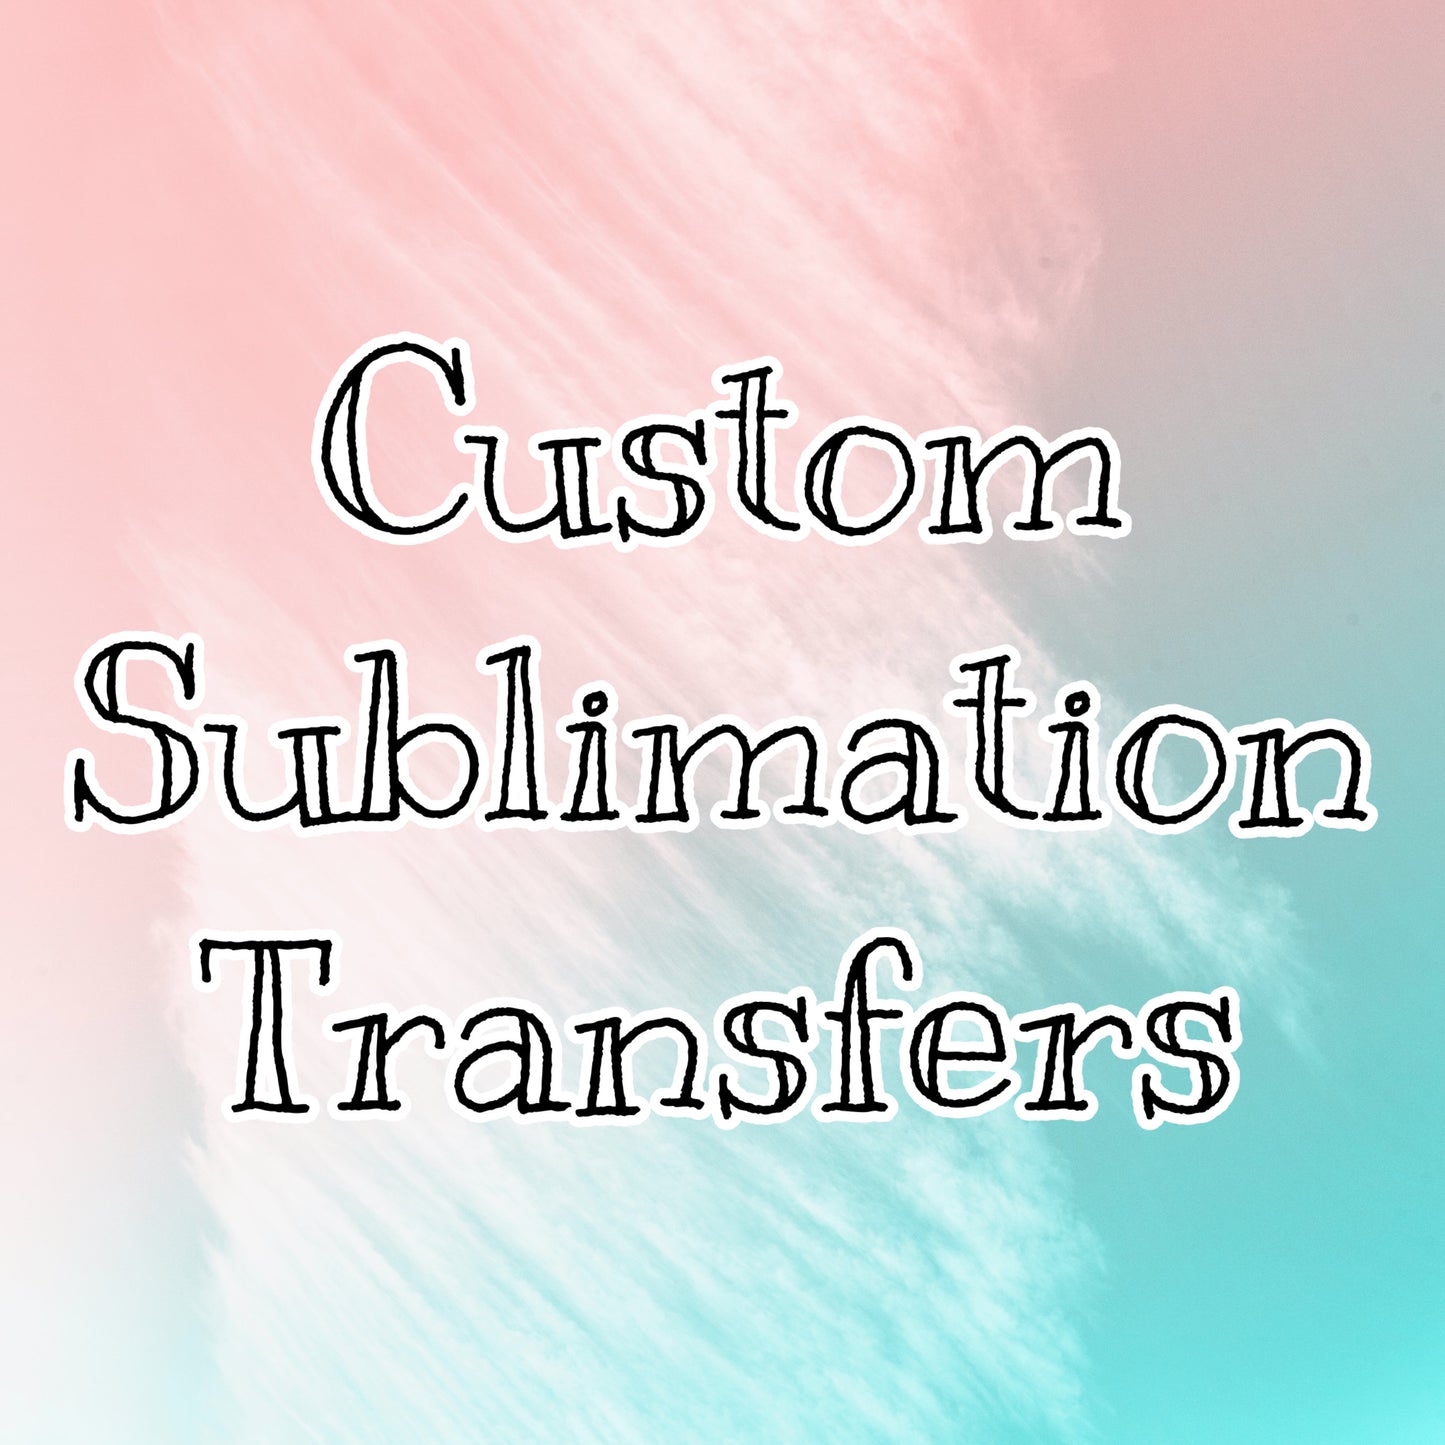 Custom Printed Sublimation Transfers